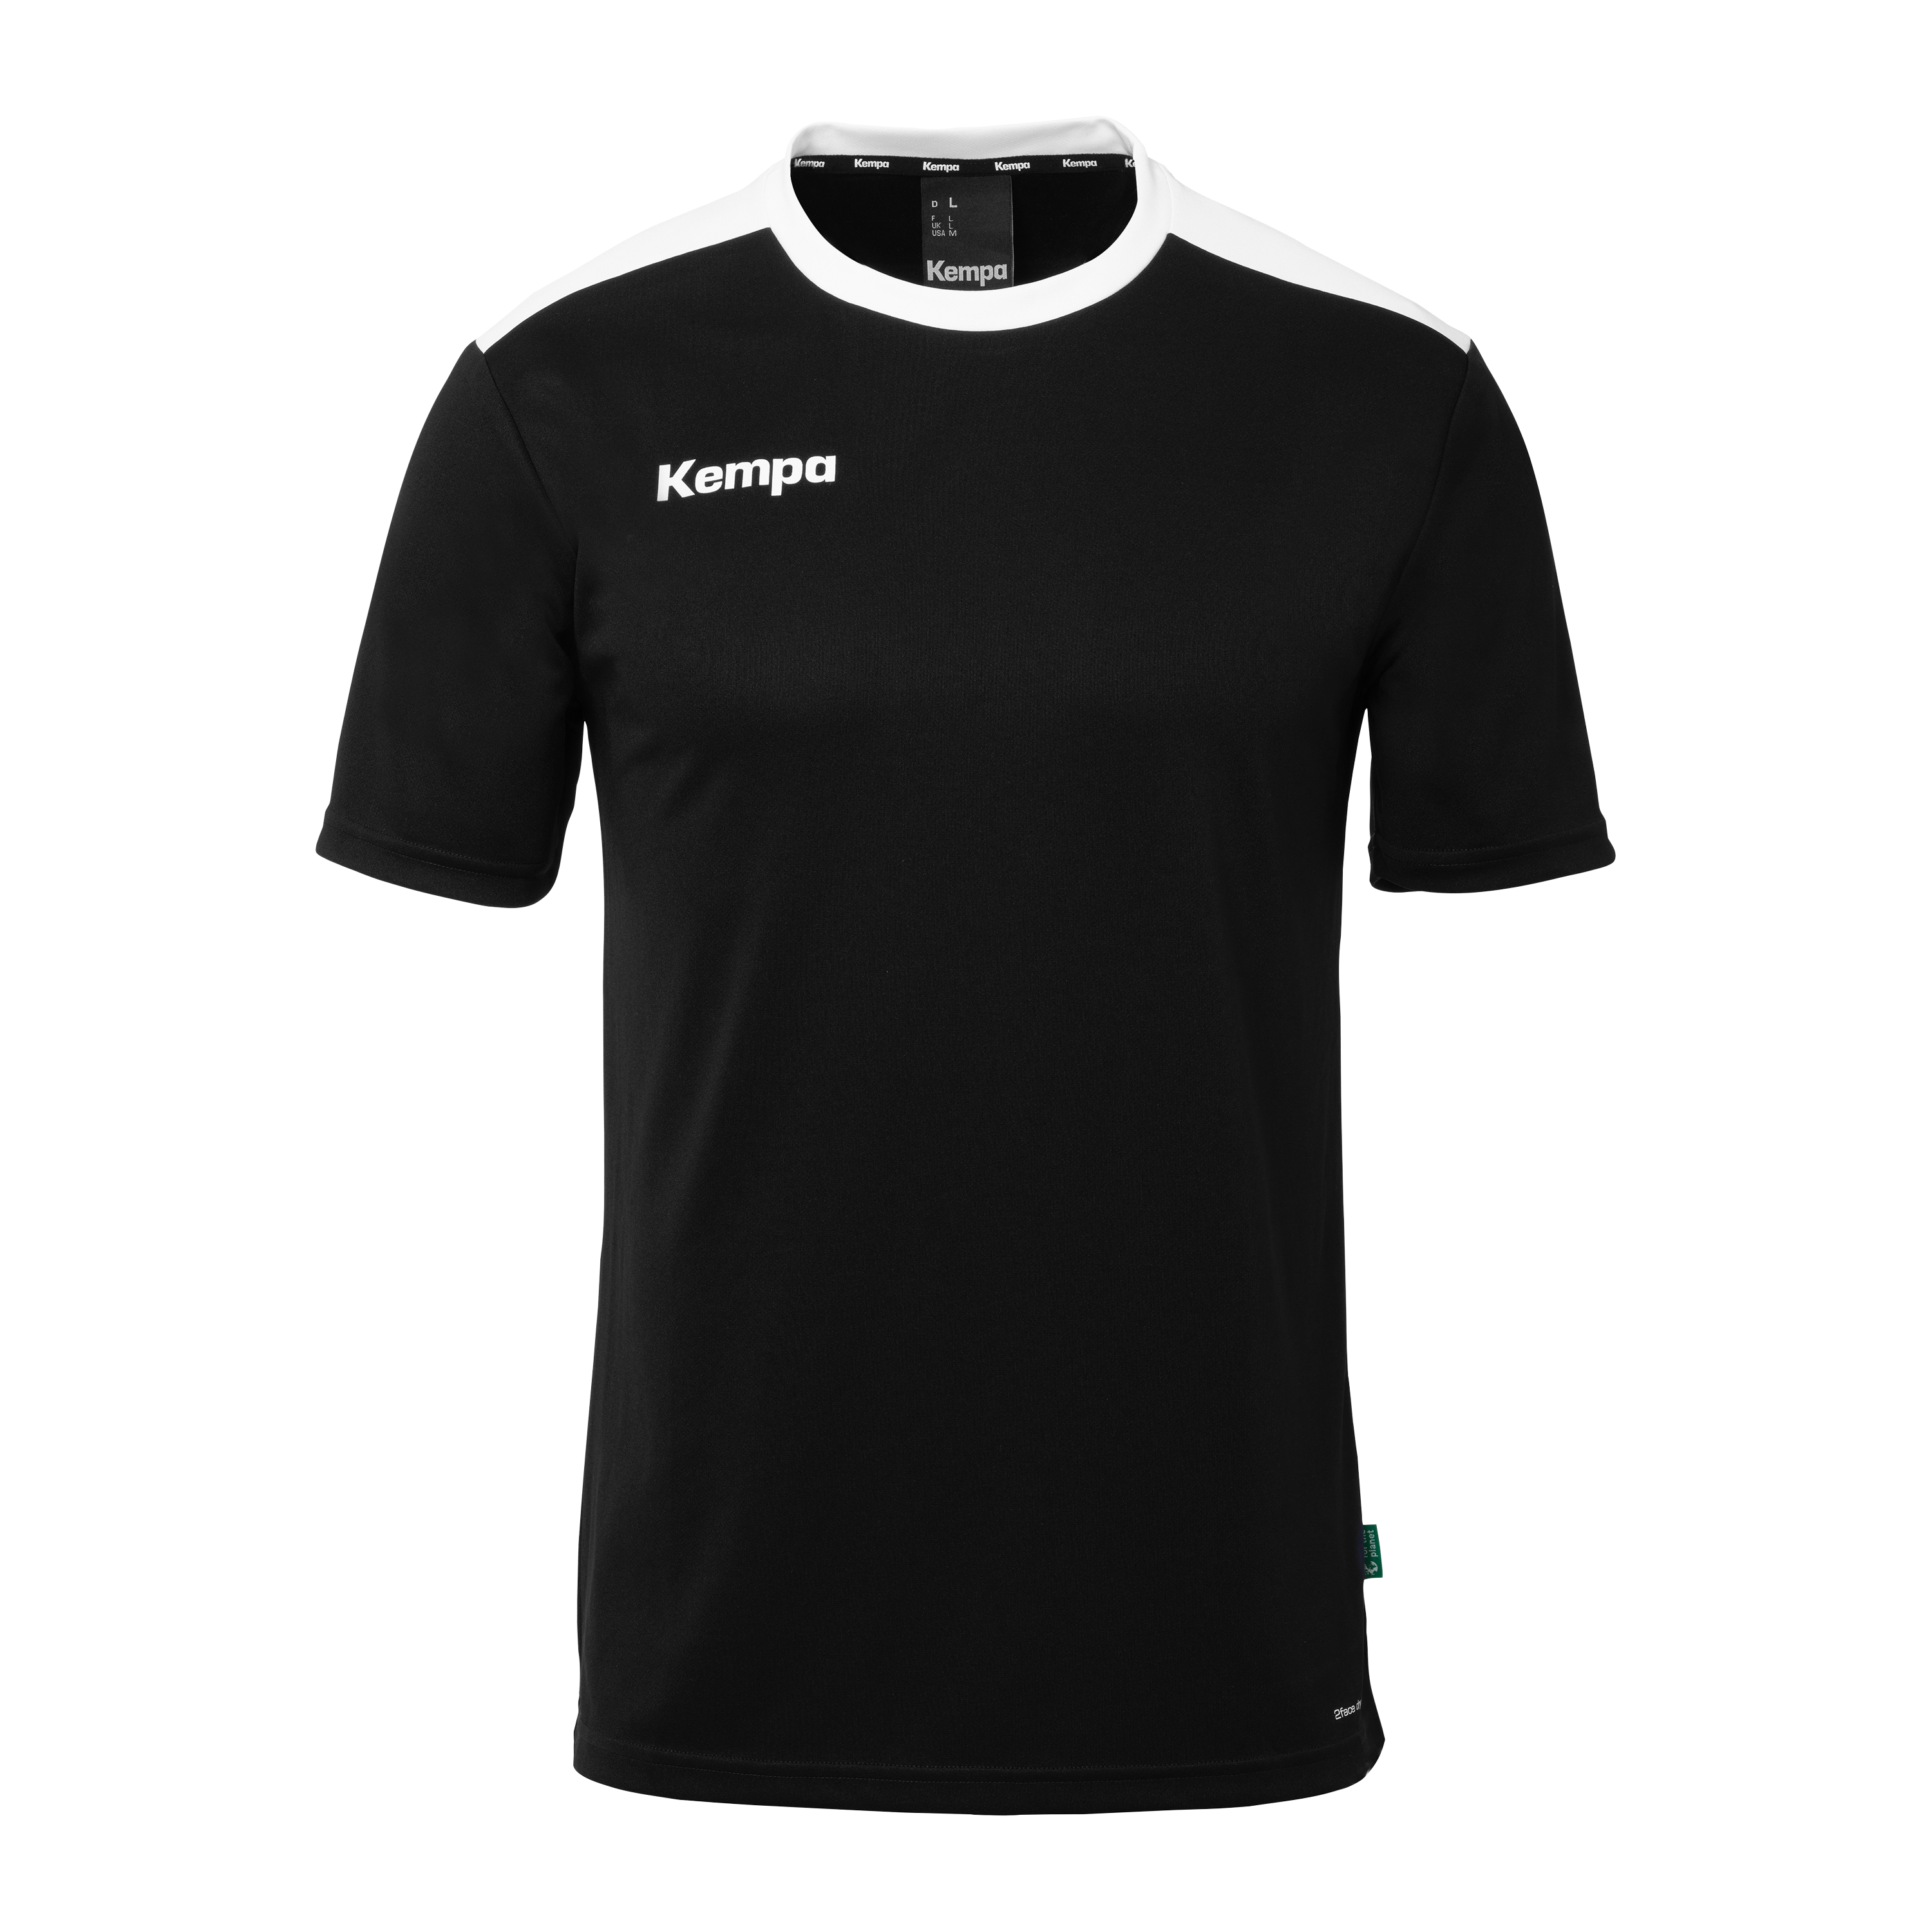 Kempa Emotion 27 Shirt schwarz/weiß